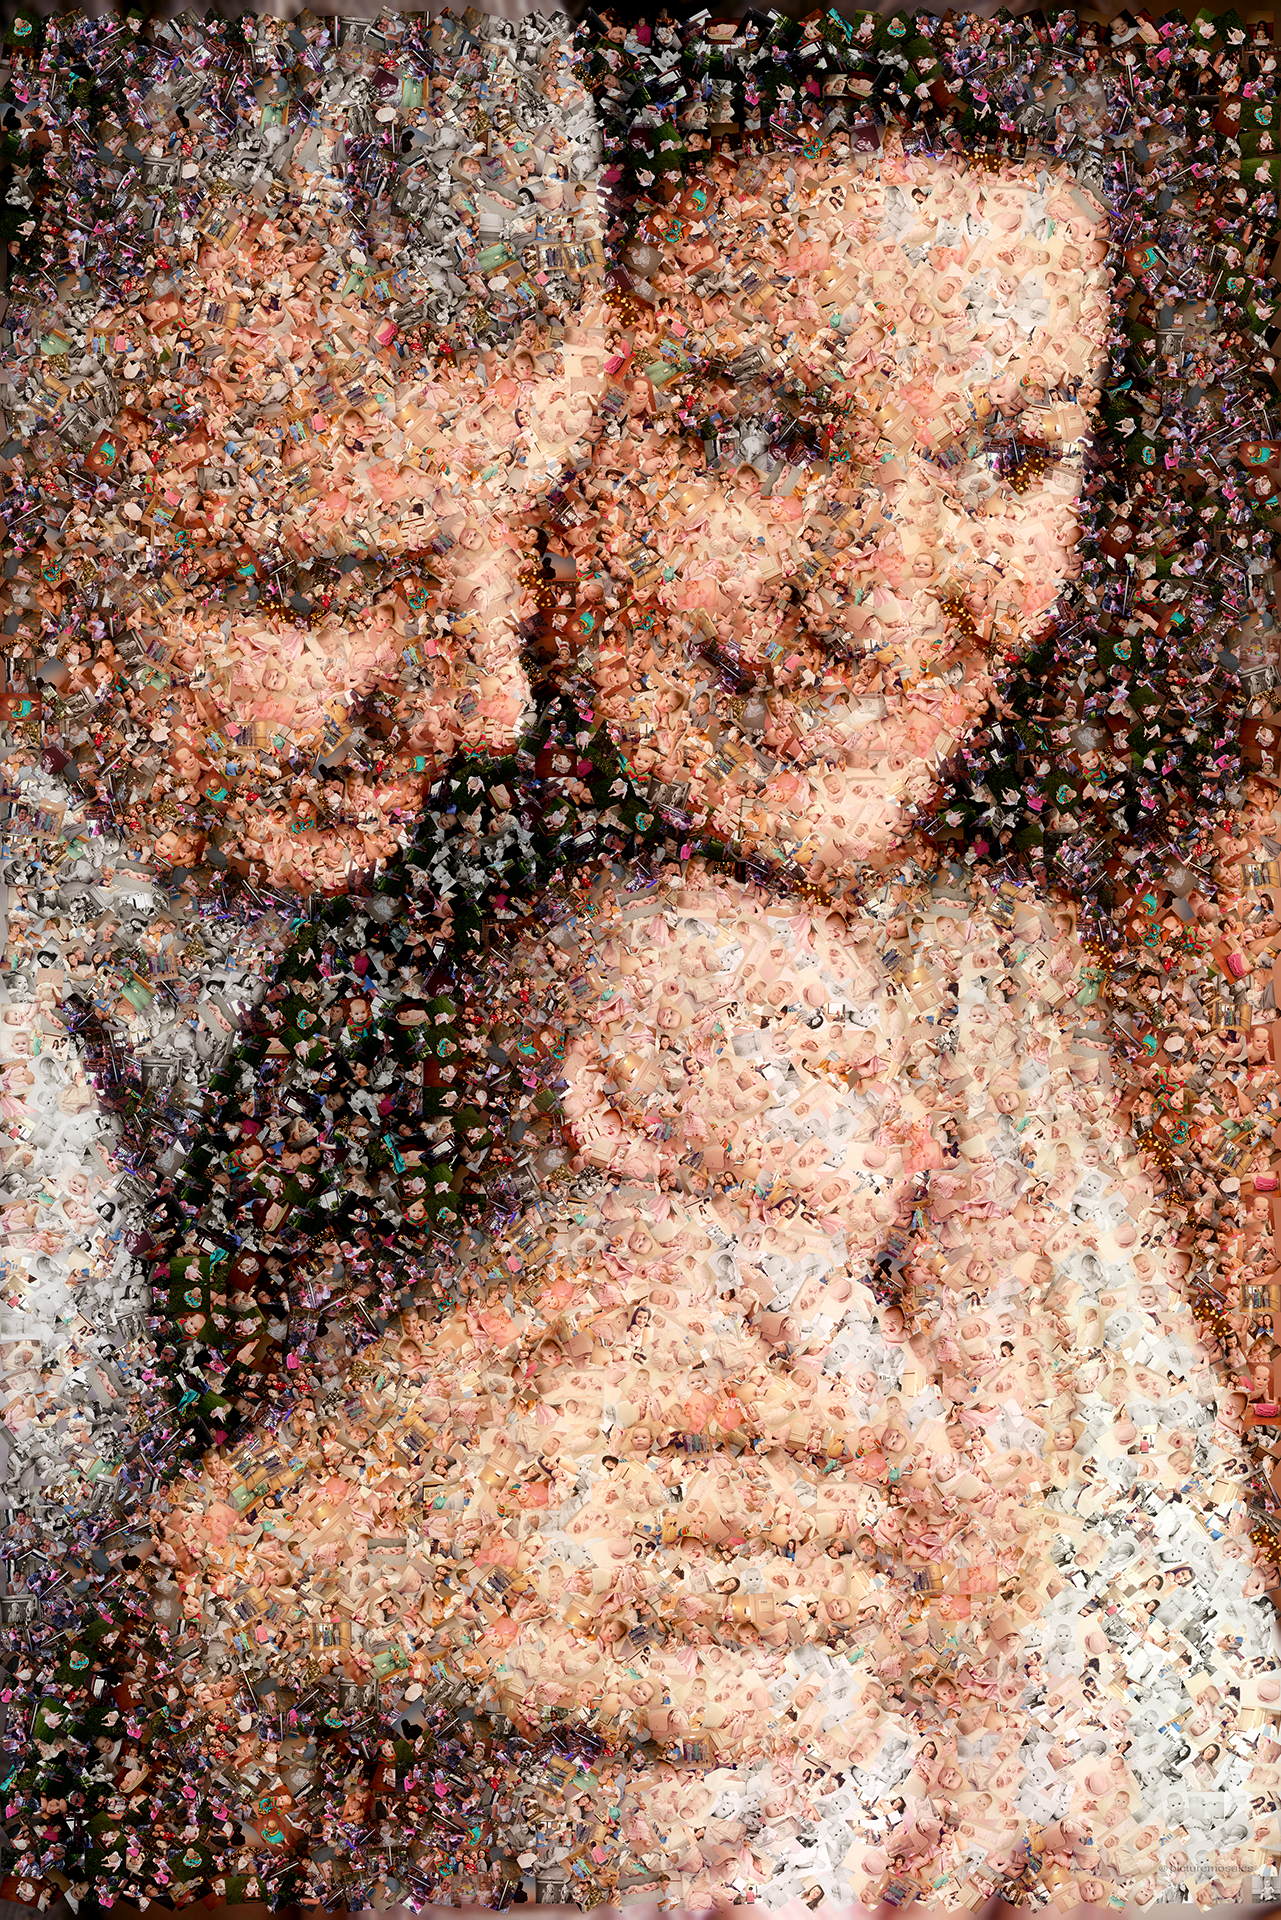 photo mosaic scatter mosaic created using 286 newborn baby photos